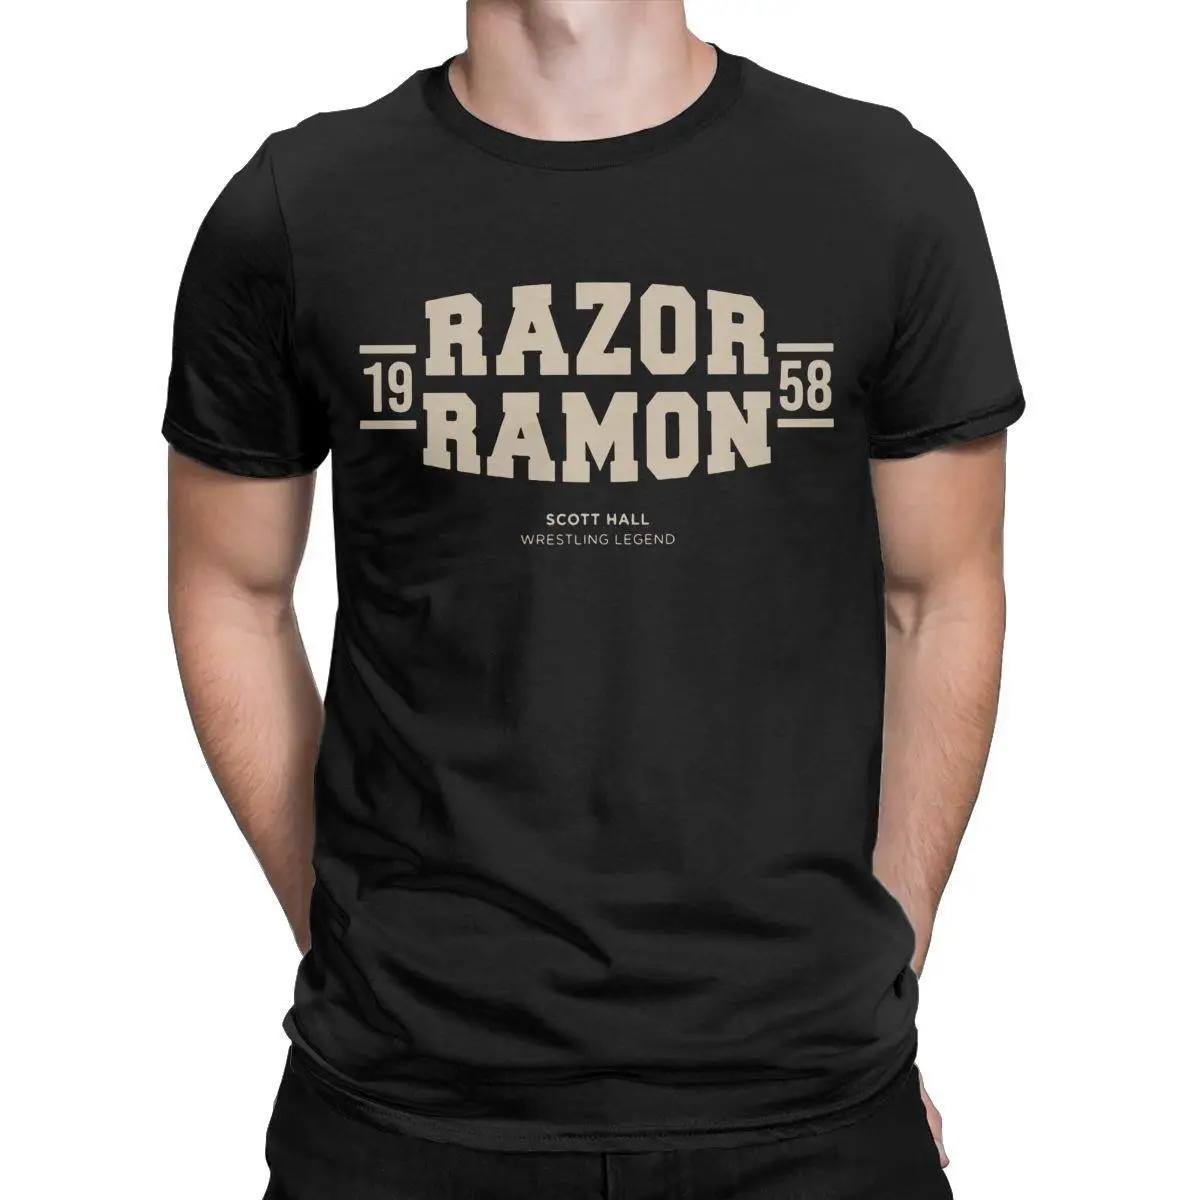 Men's Razor Ramon Wrestling Legend T Shirt Cotton Tops Funny Short Sleeve Round Neck Tee Shirt Graphic T-Shirts